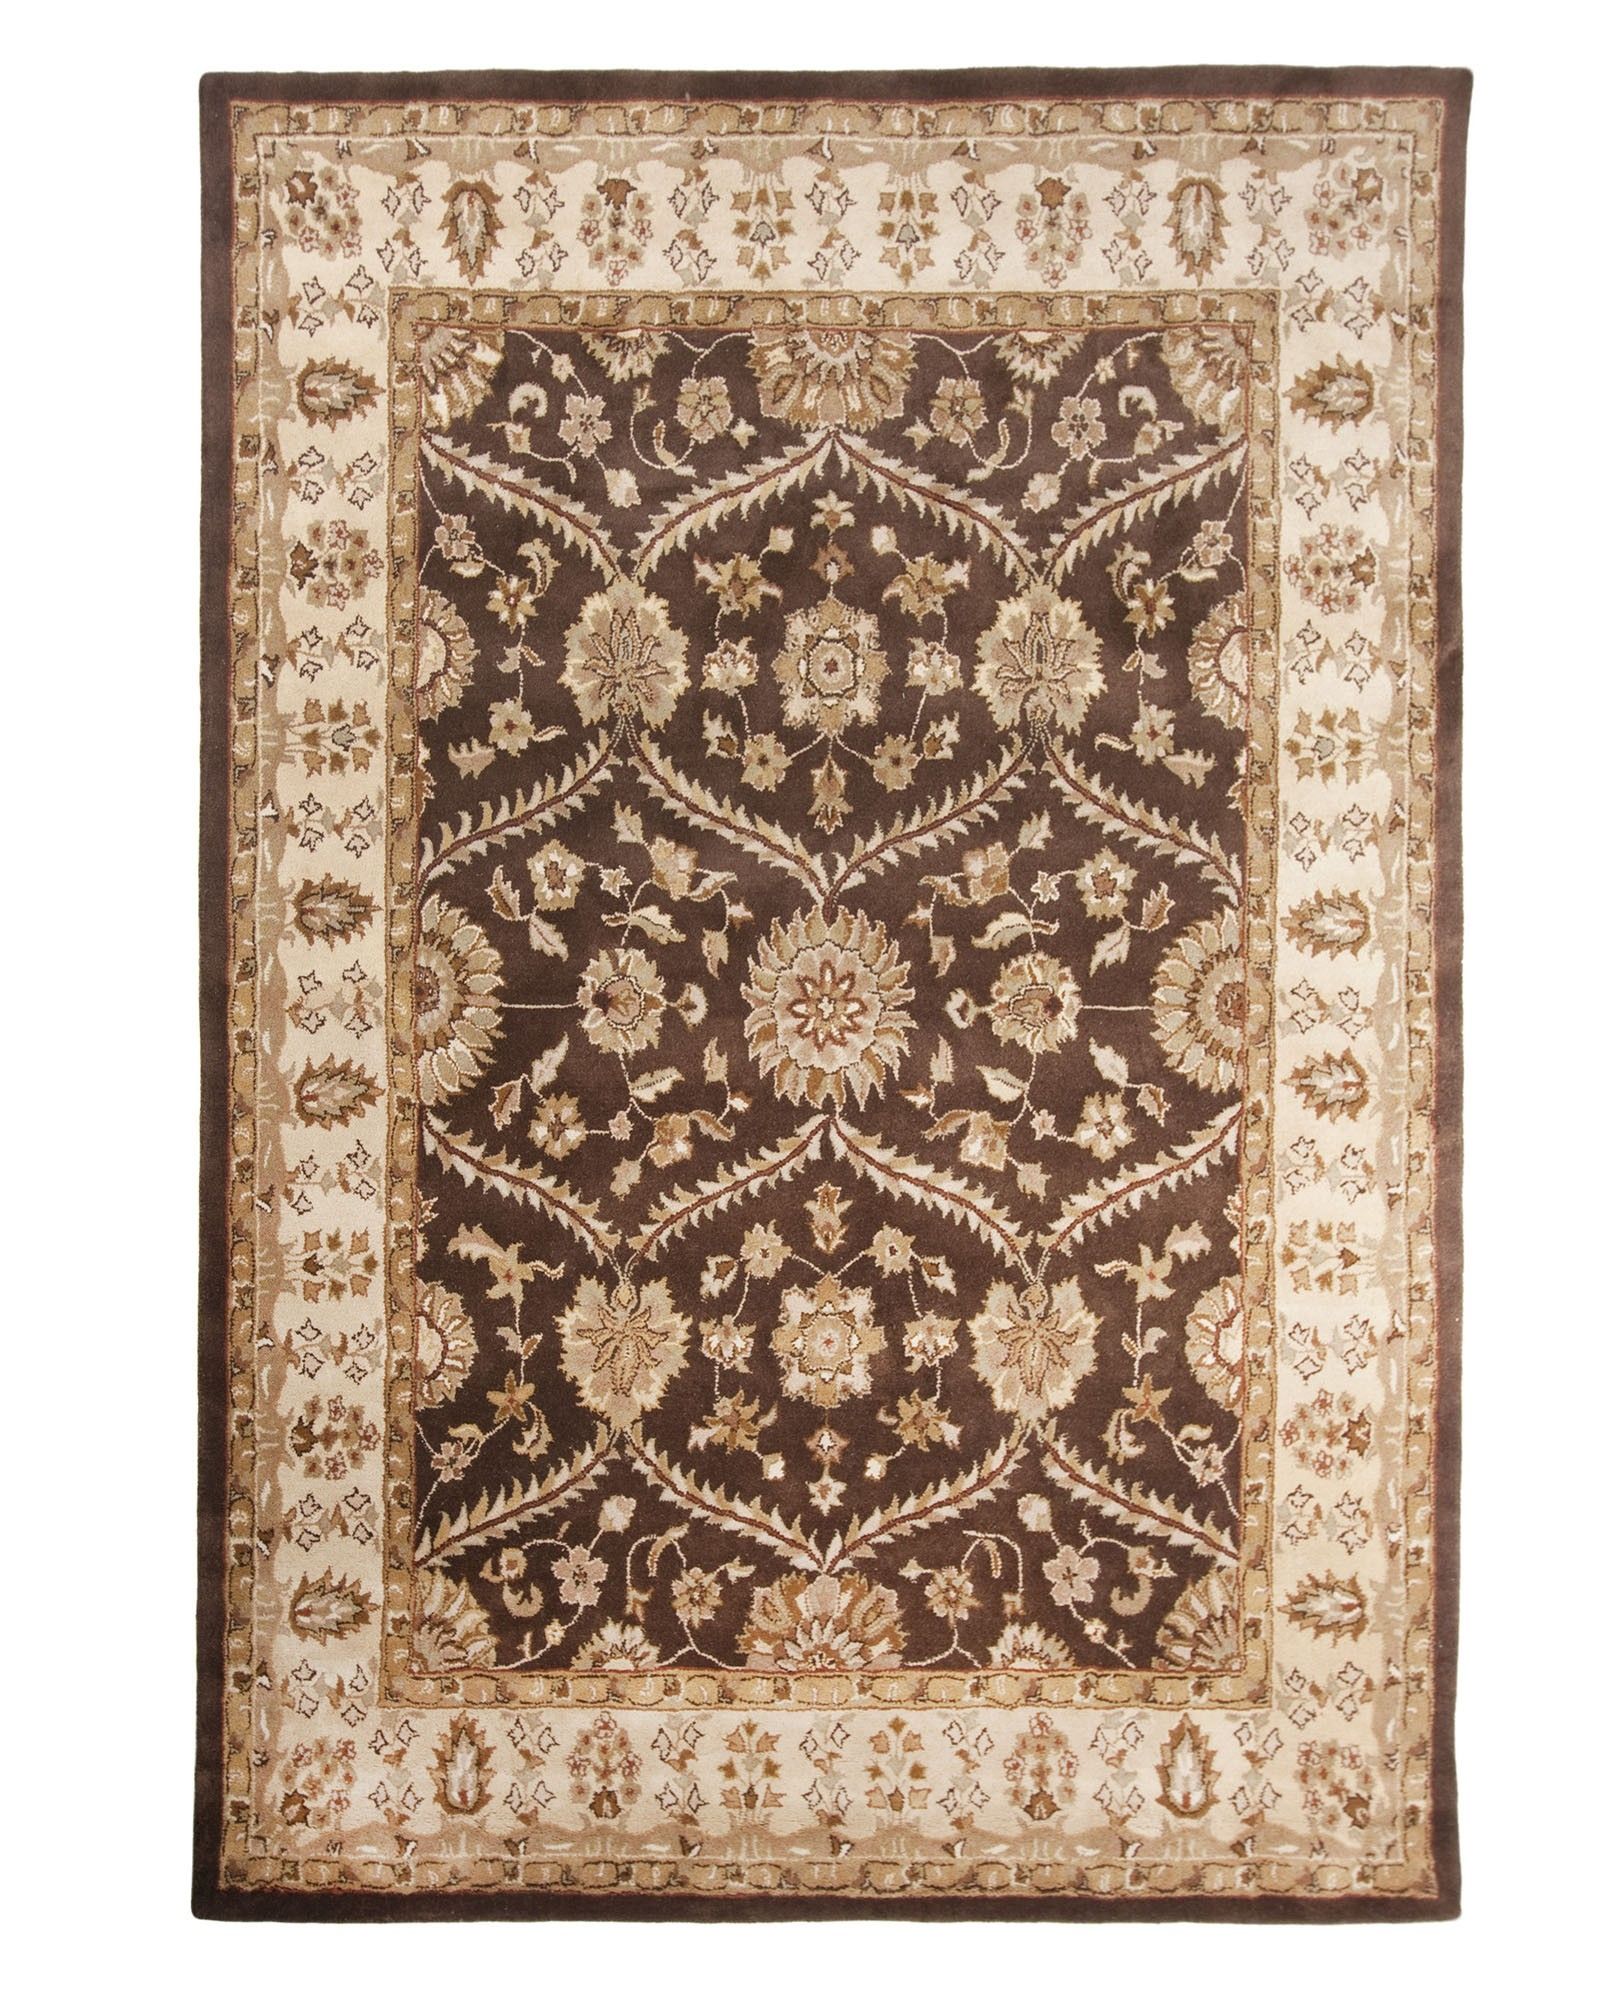 Brown Handmade Traditional Wool Area Rug Carpet Inside Traditional Wool Area Rugs (View 3 of 15)